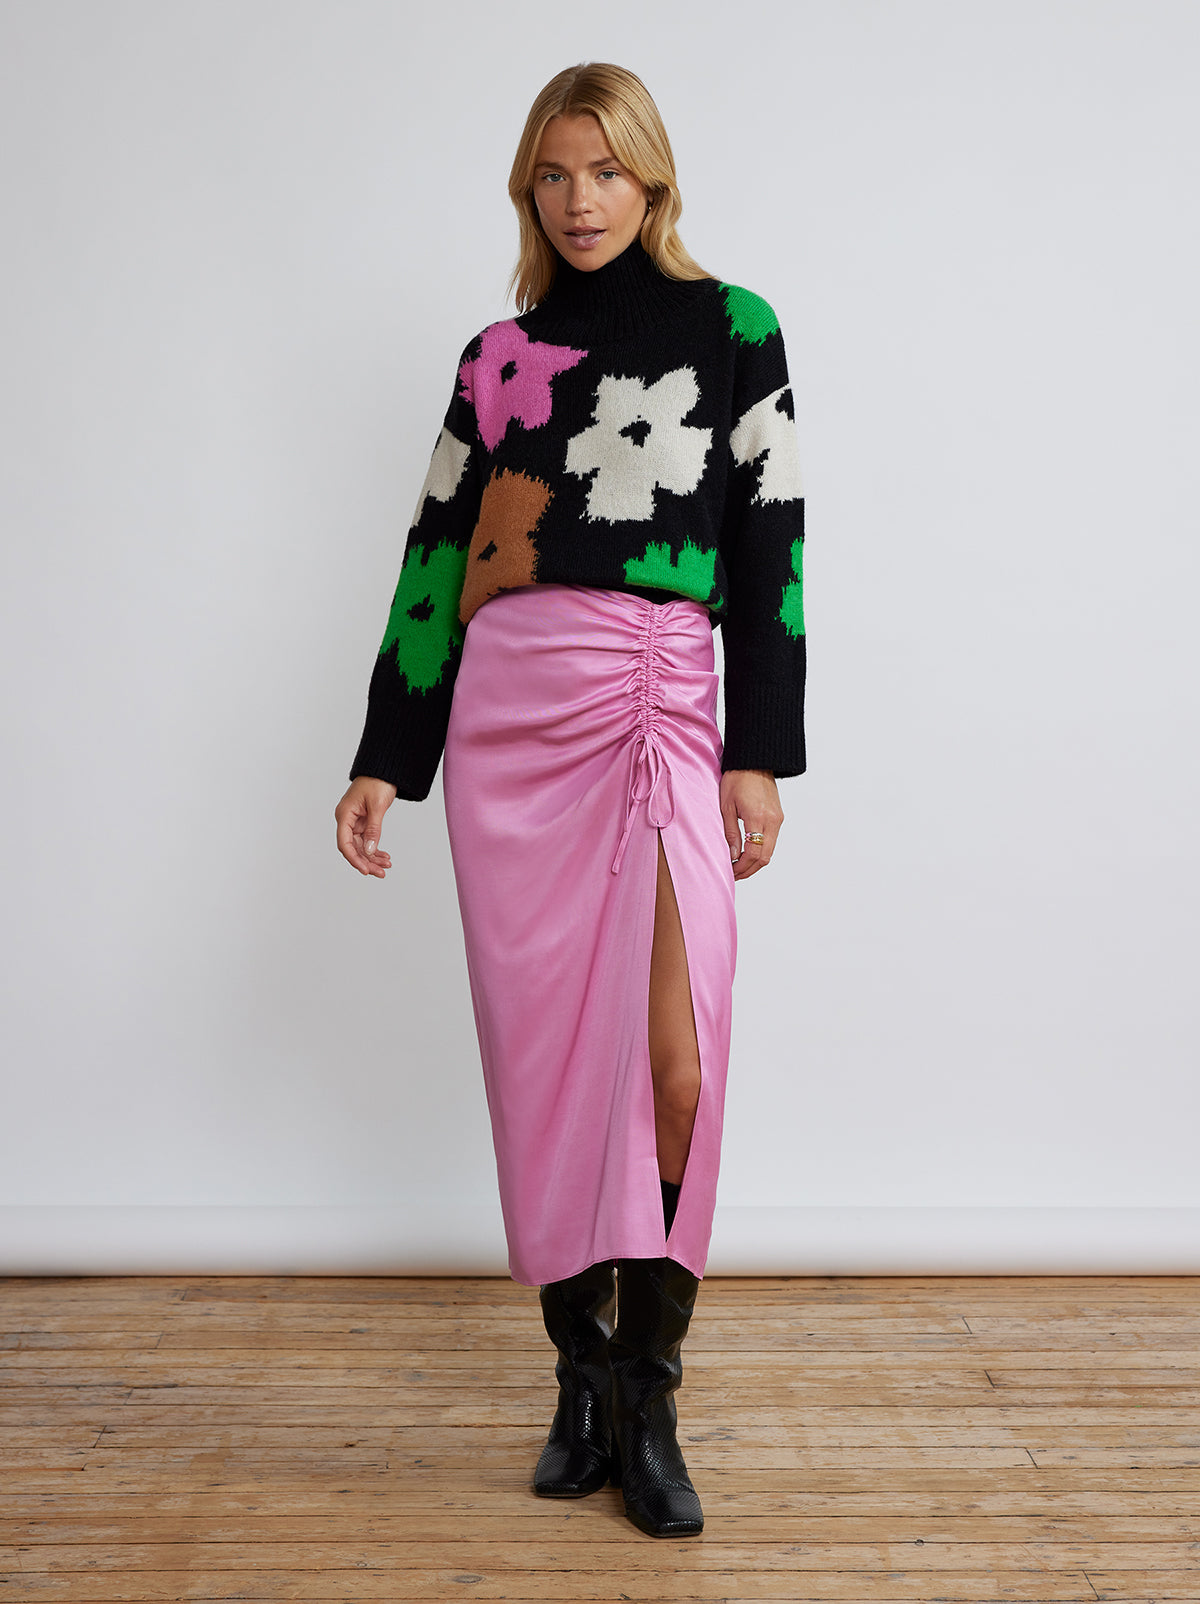 Emmeline Pink Ruched Skirt by KITRI Studio